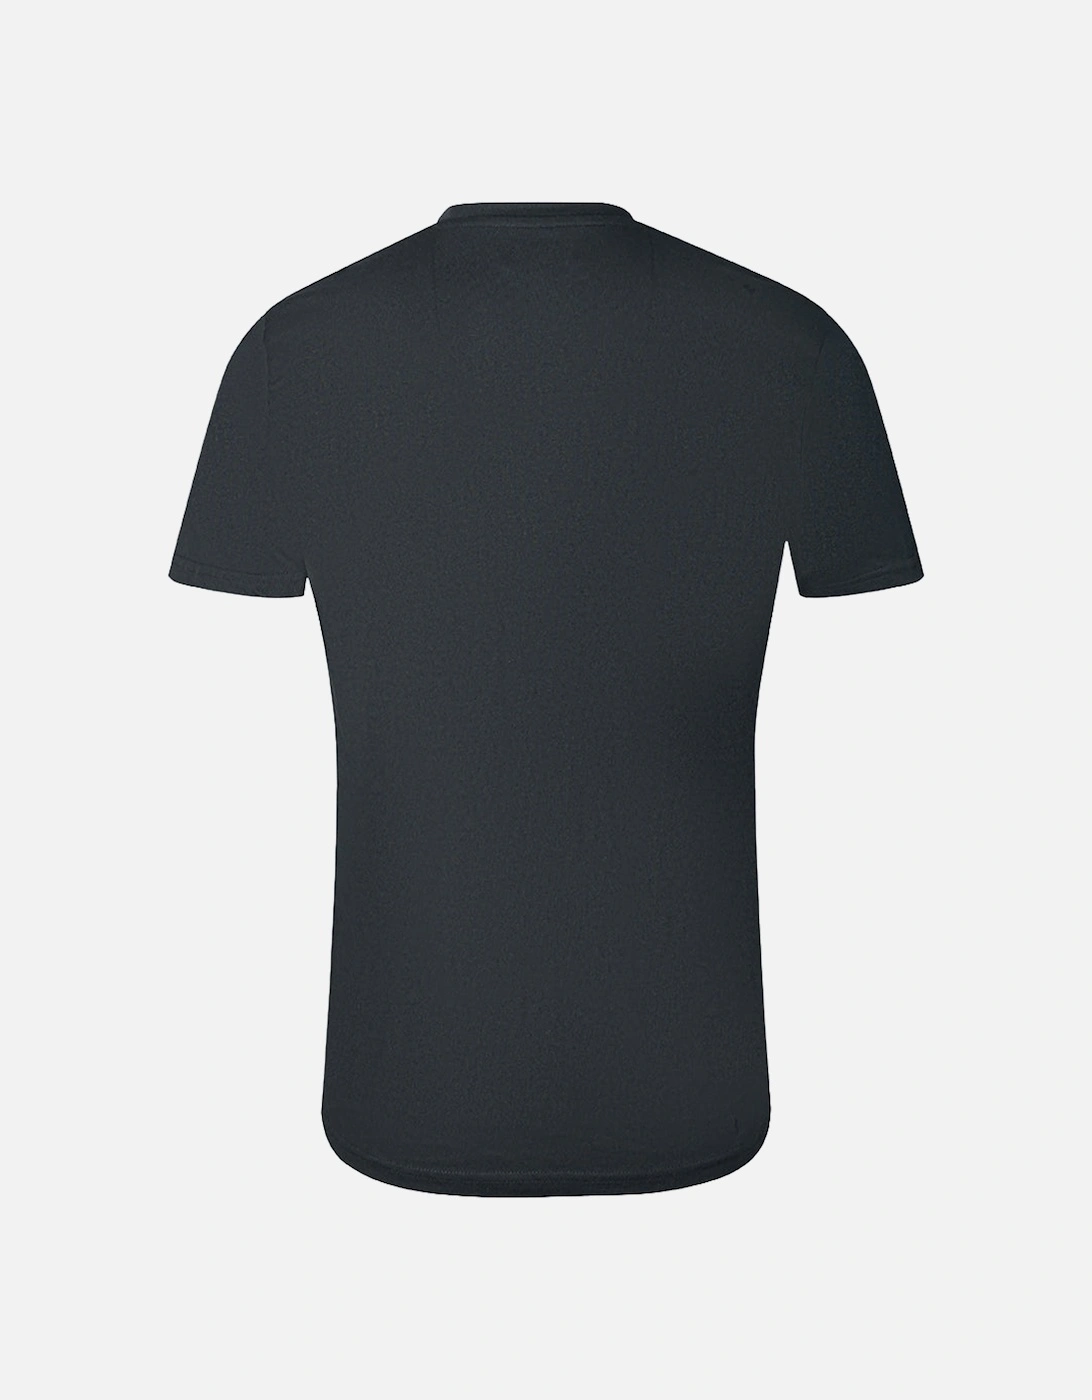 Cavalli Class Leopard Print Silhouette Black T-Shirt